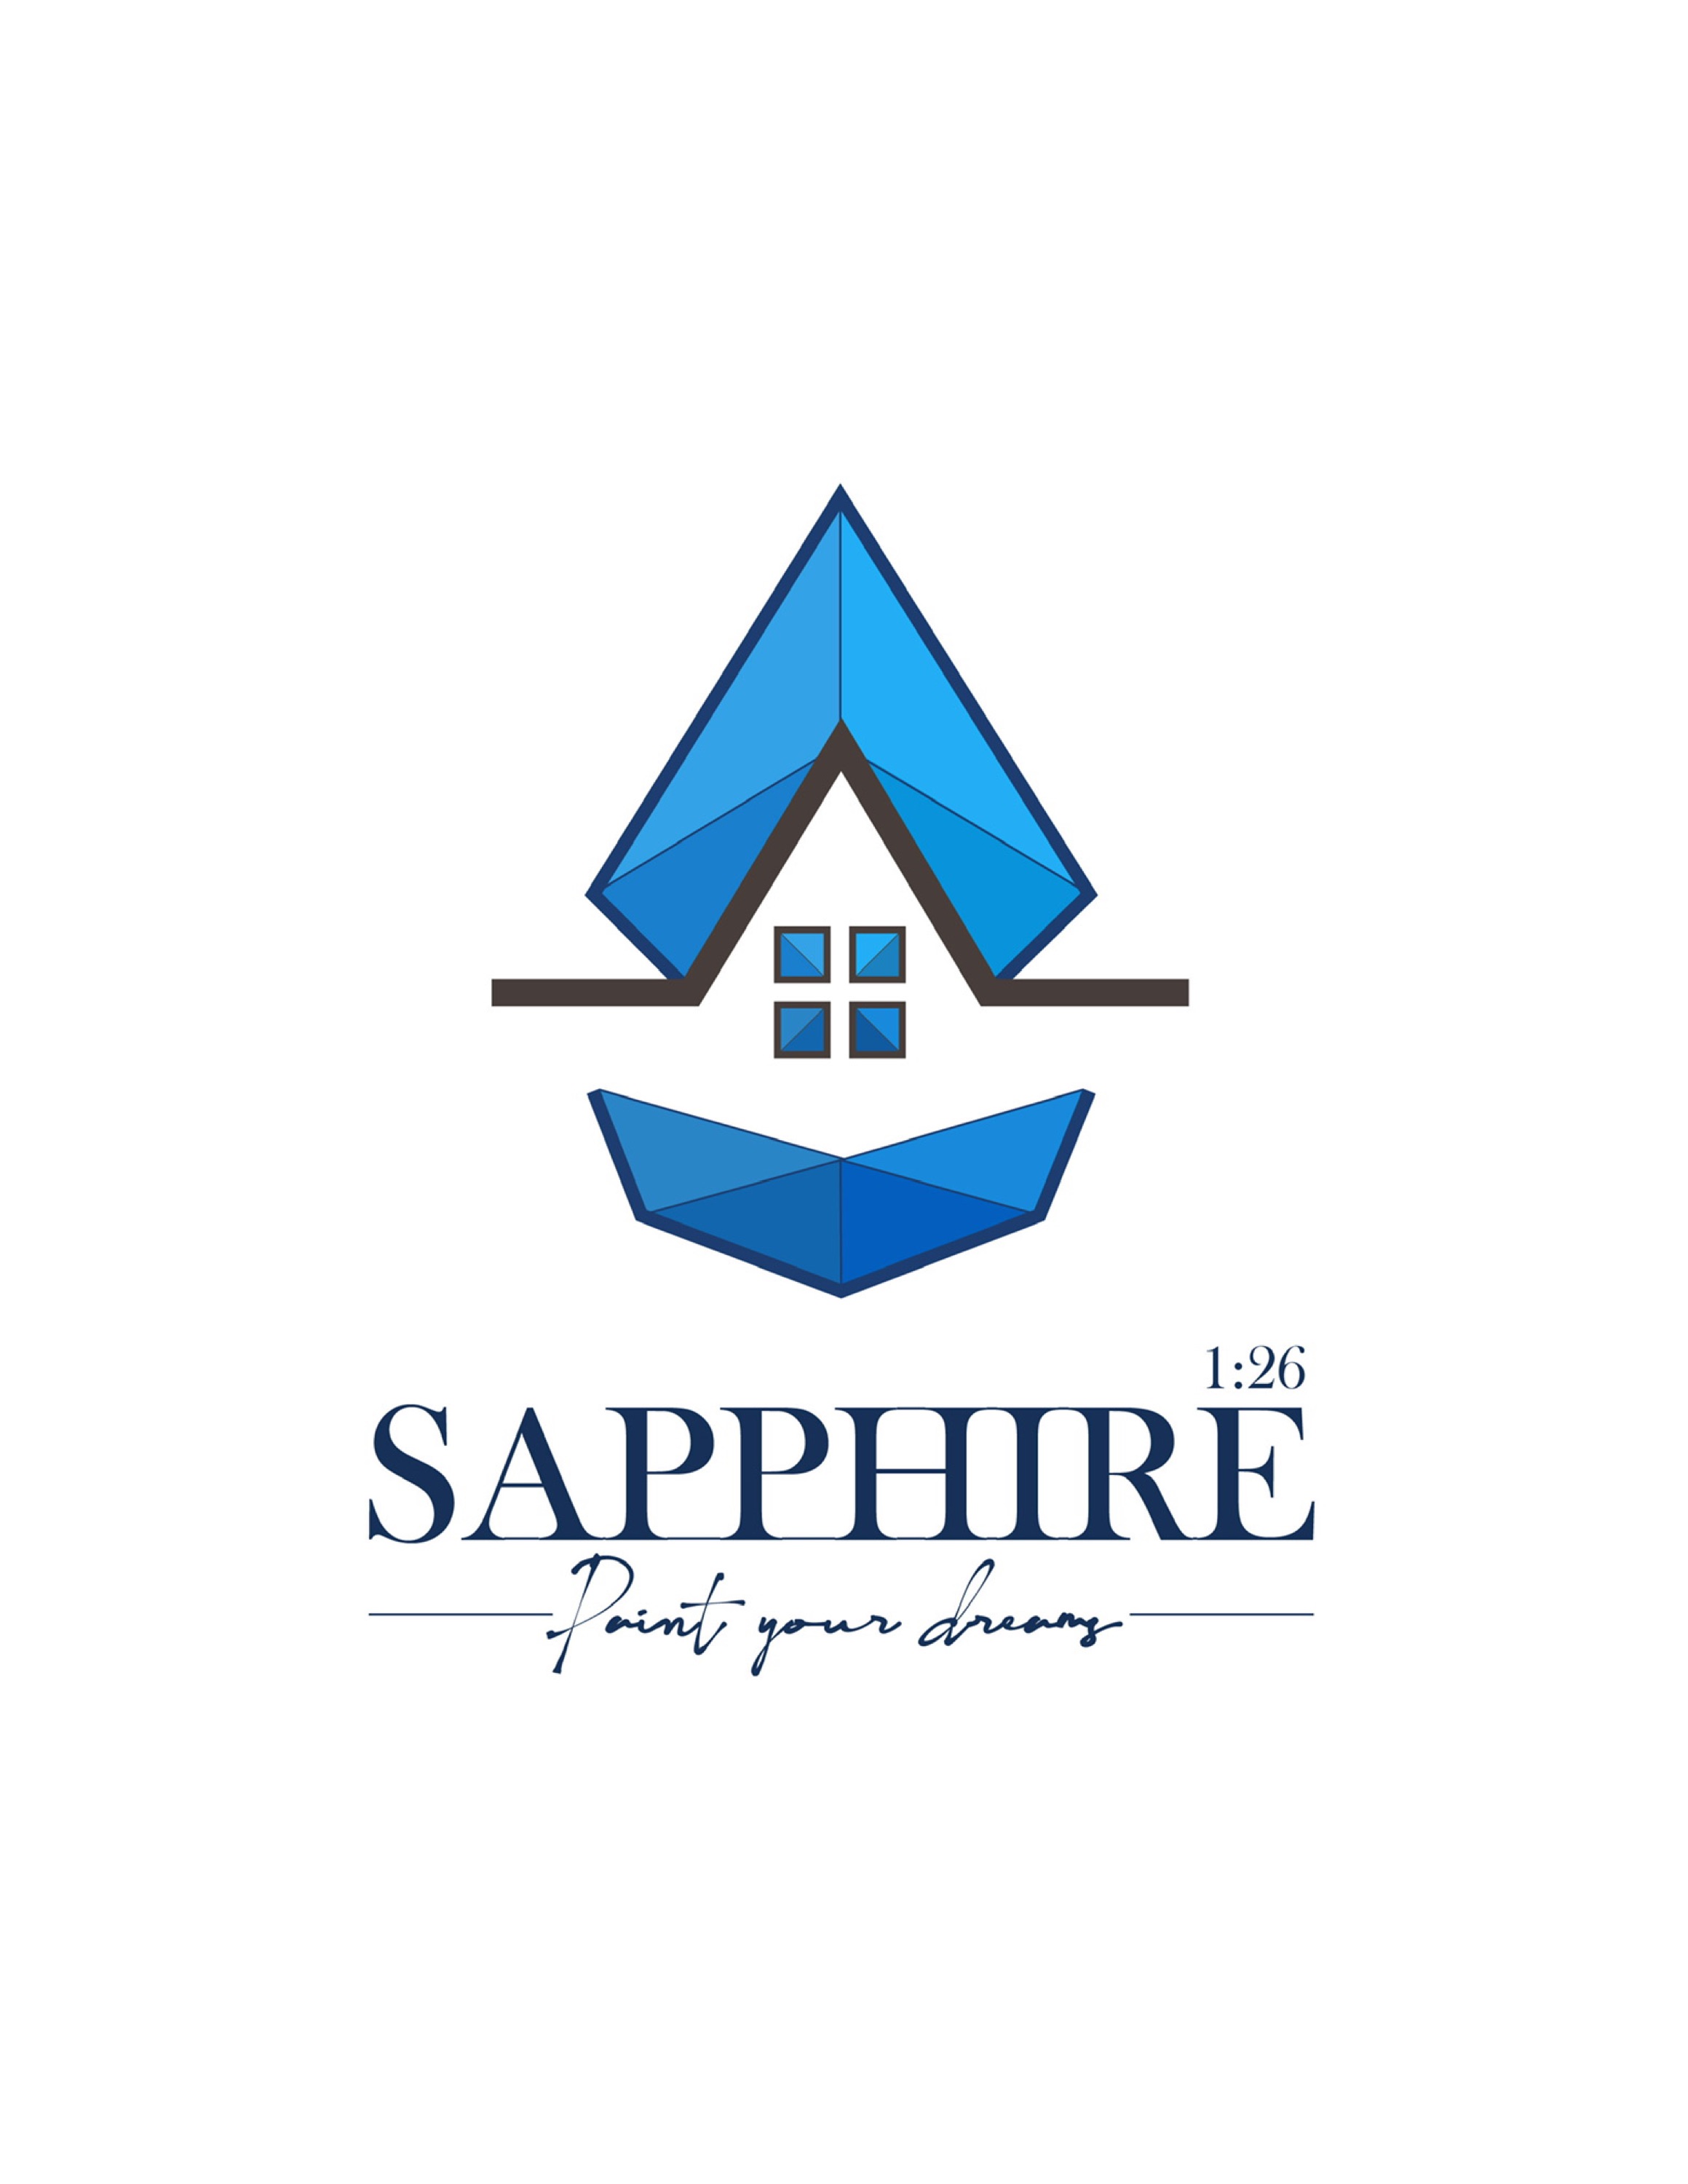 Sapphire Painting Logo